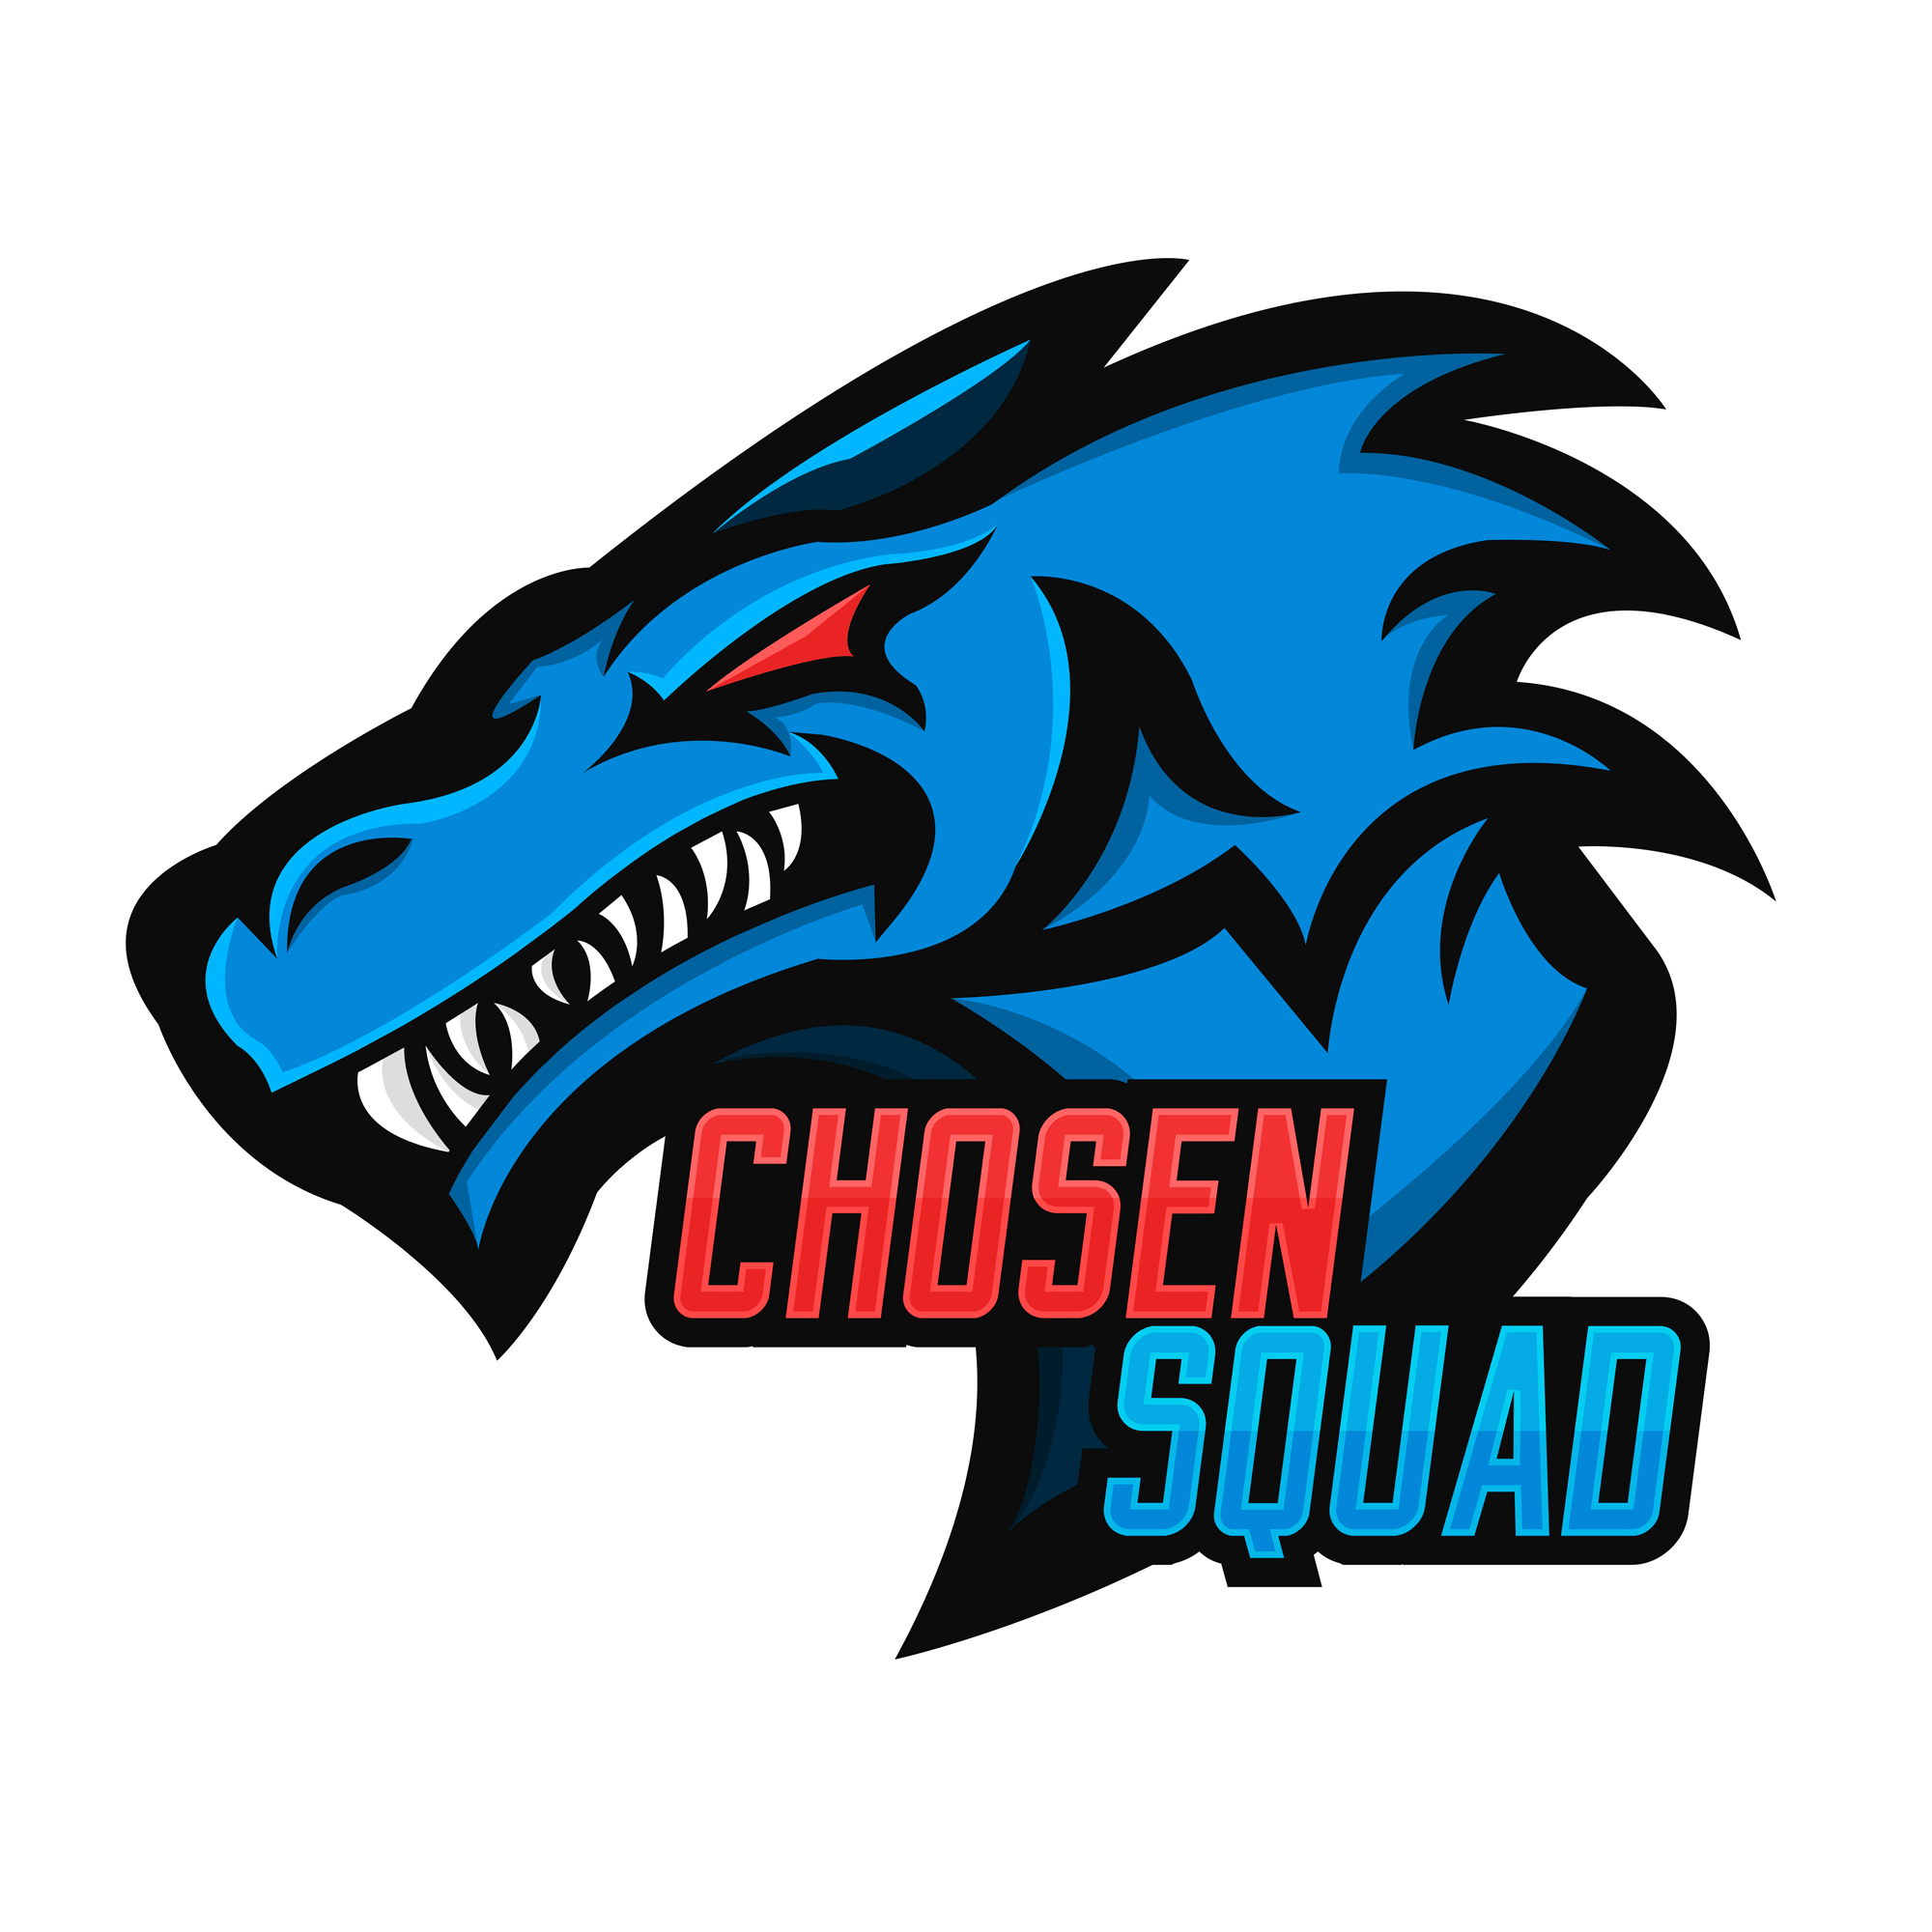 Chosen Logo - Chosen Squad Logo - Imgur